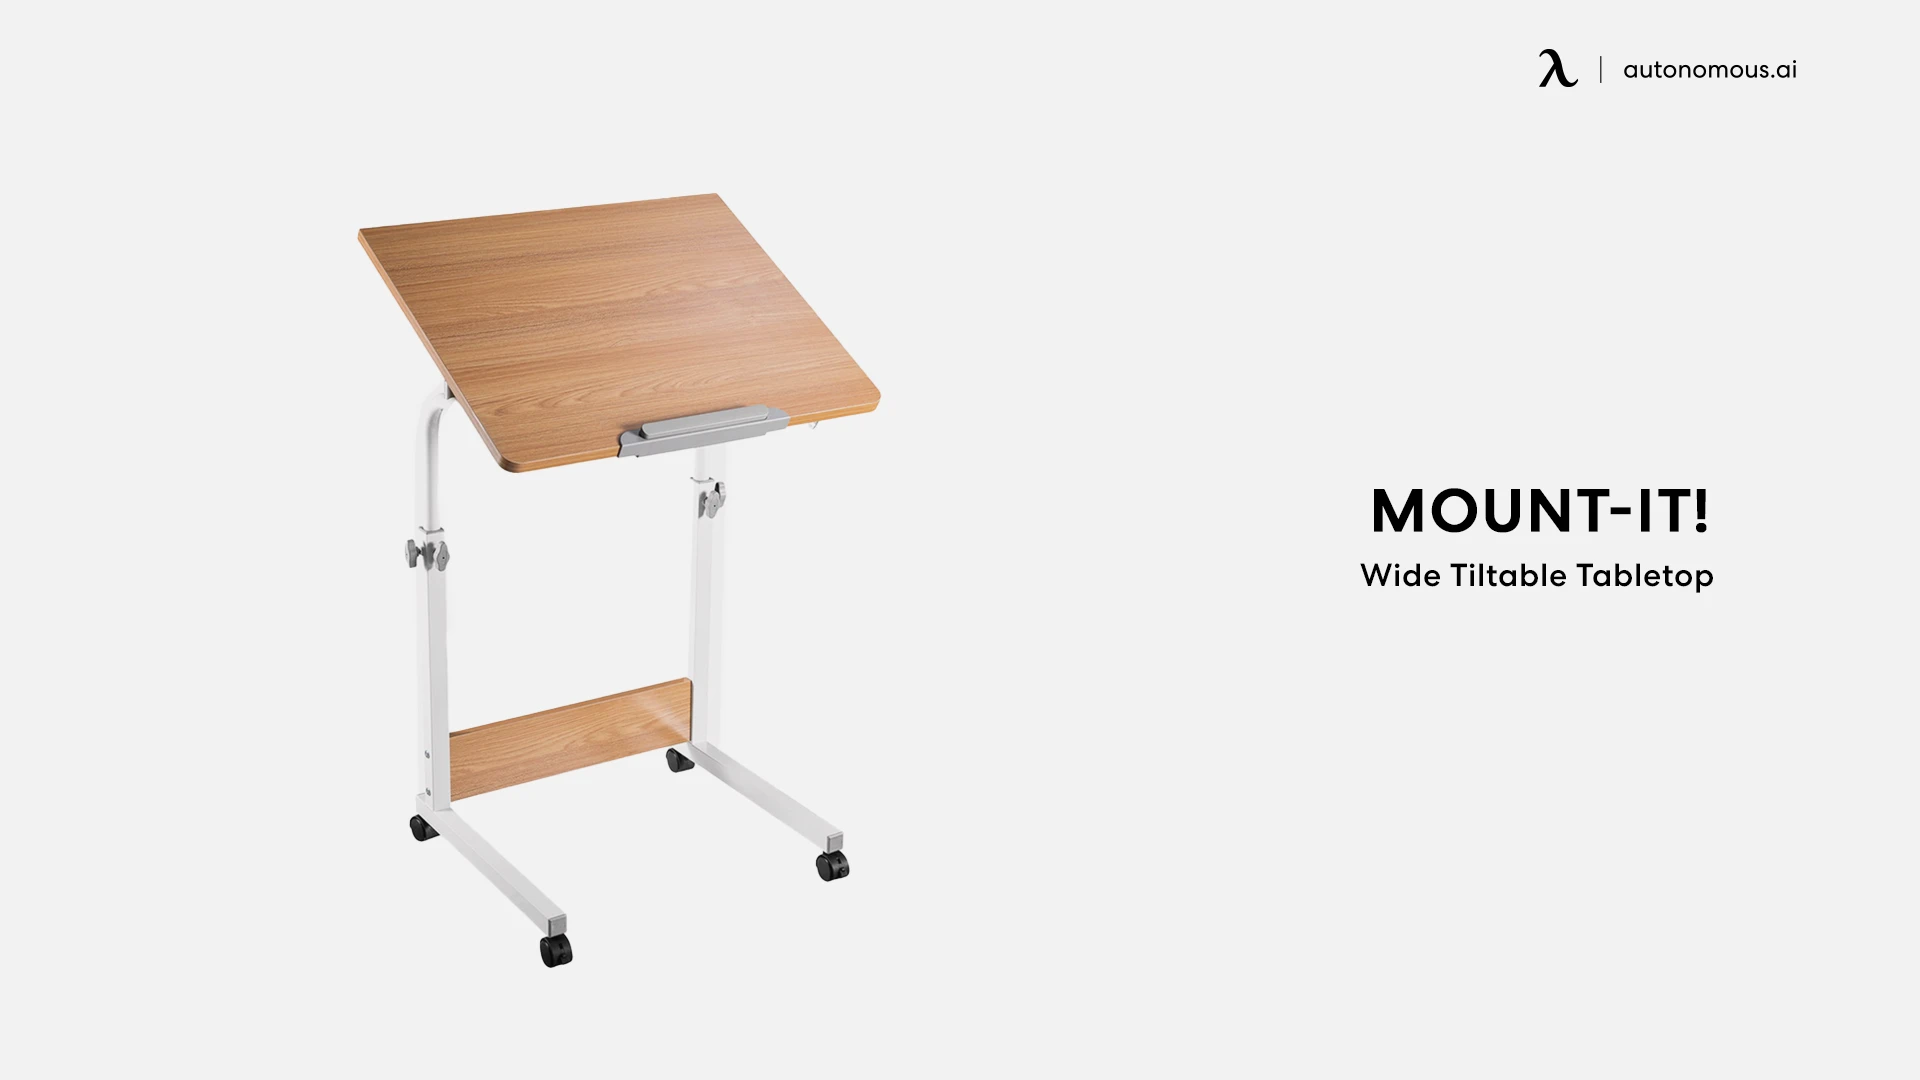 Mount-It! Rolling Desk: Tiltable Desktop